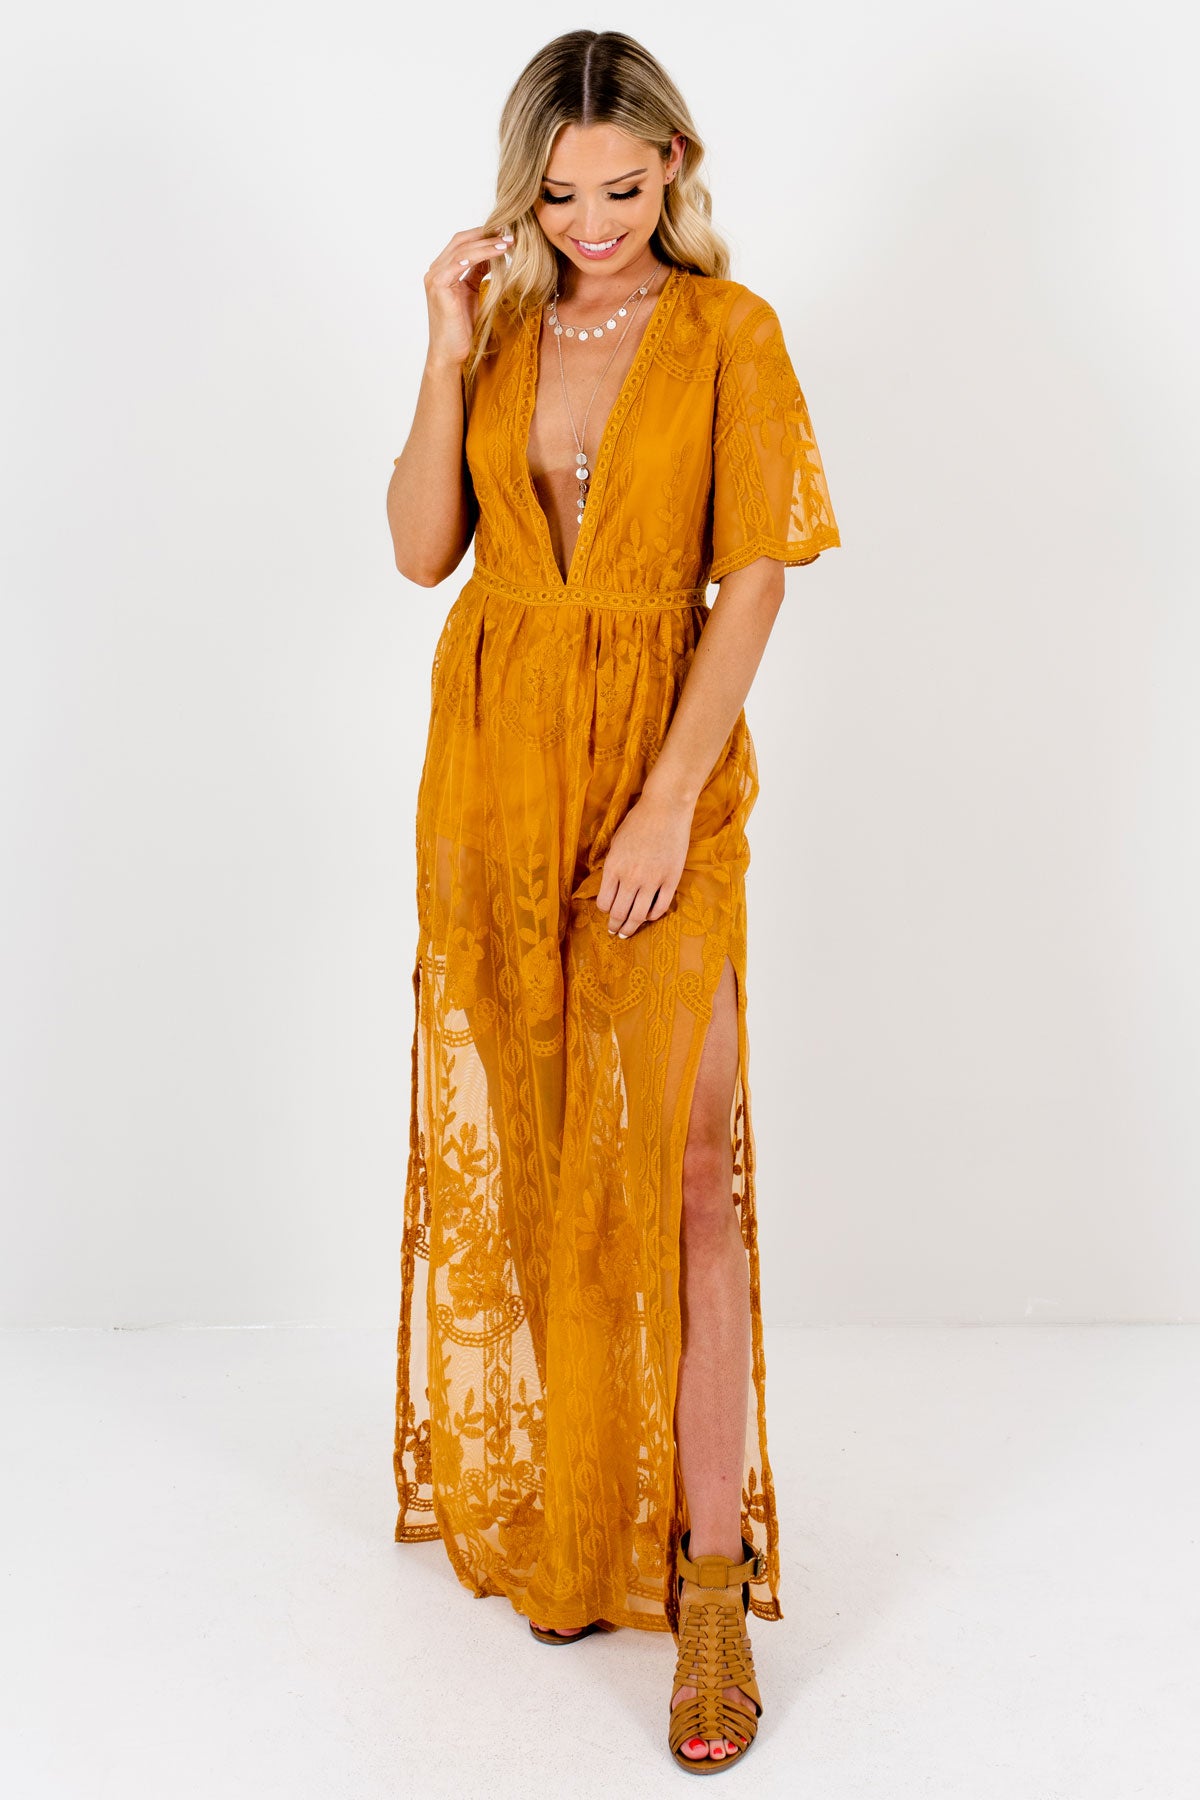 Mustard Yellow Lace V Neckline Romper Dresses Affordable Online Boutique